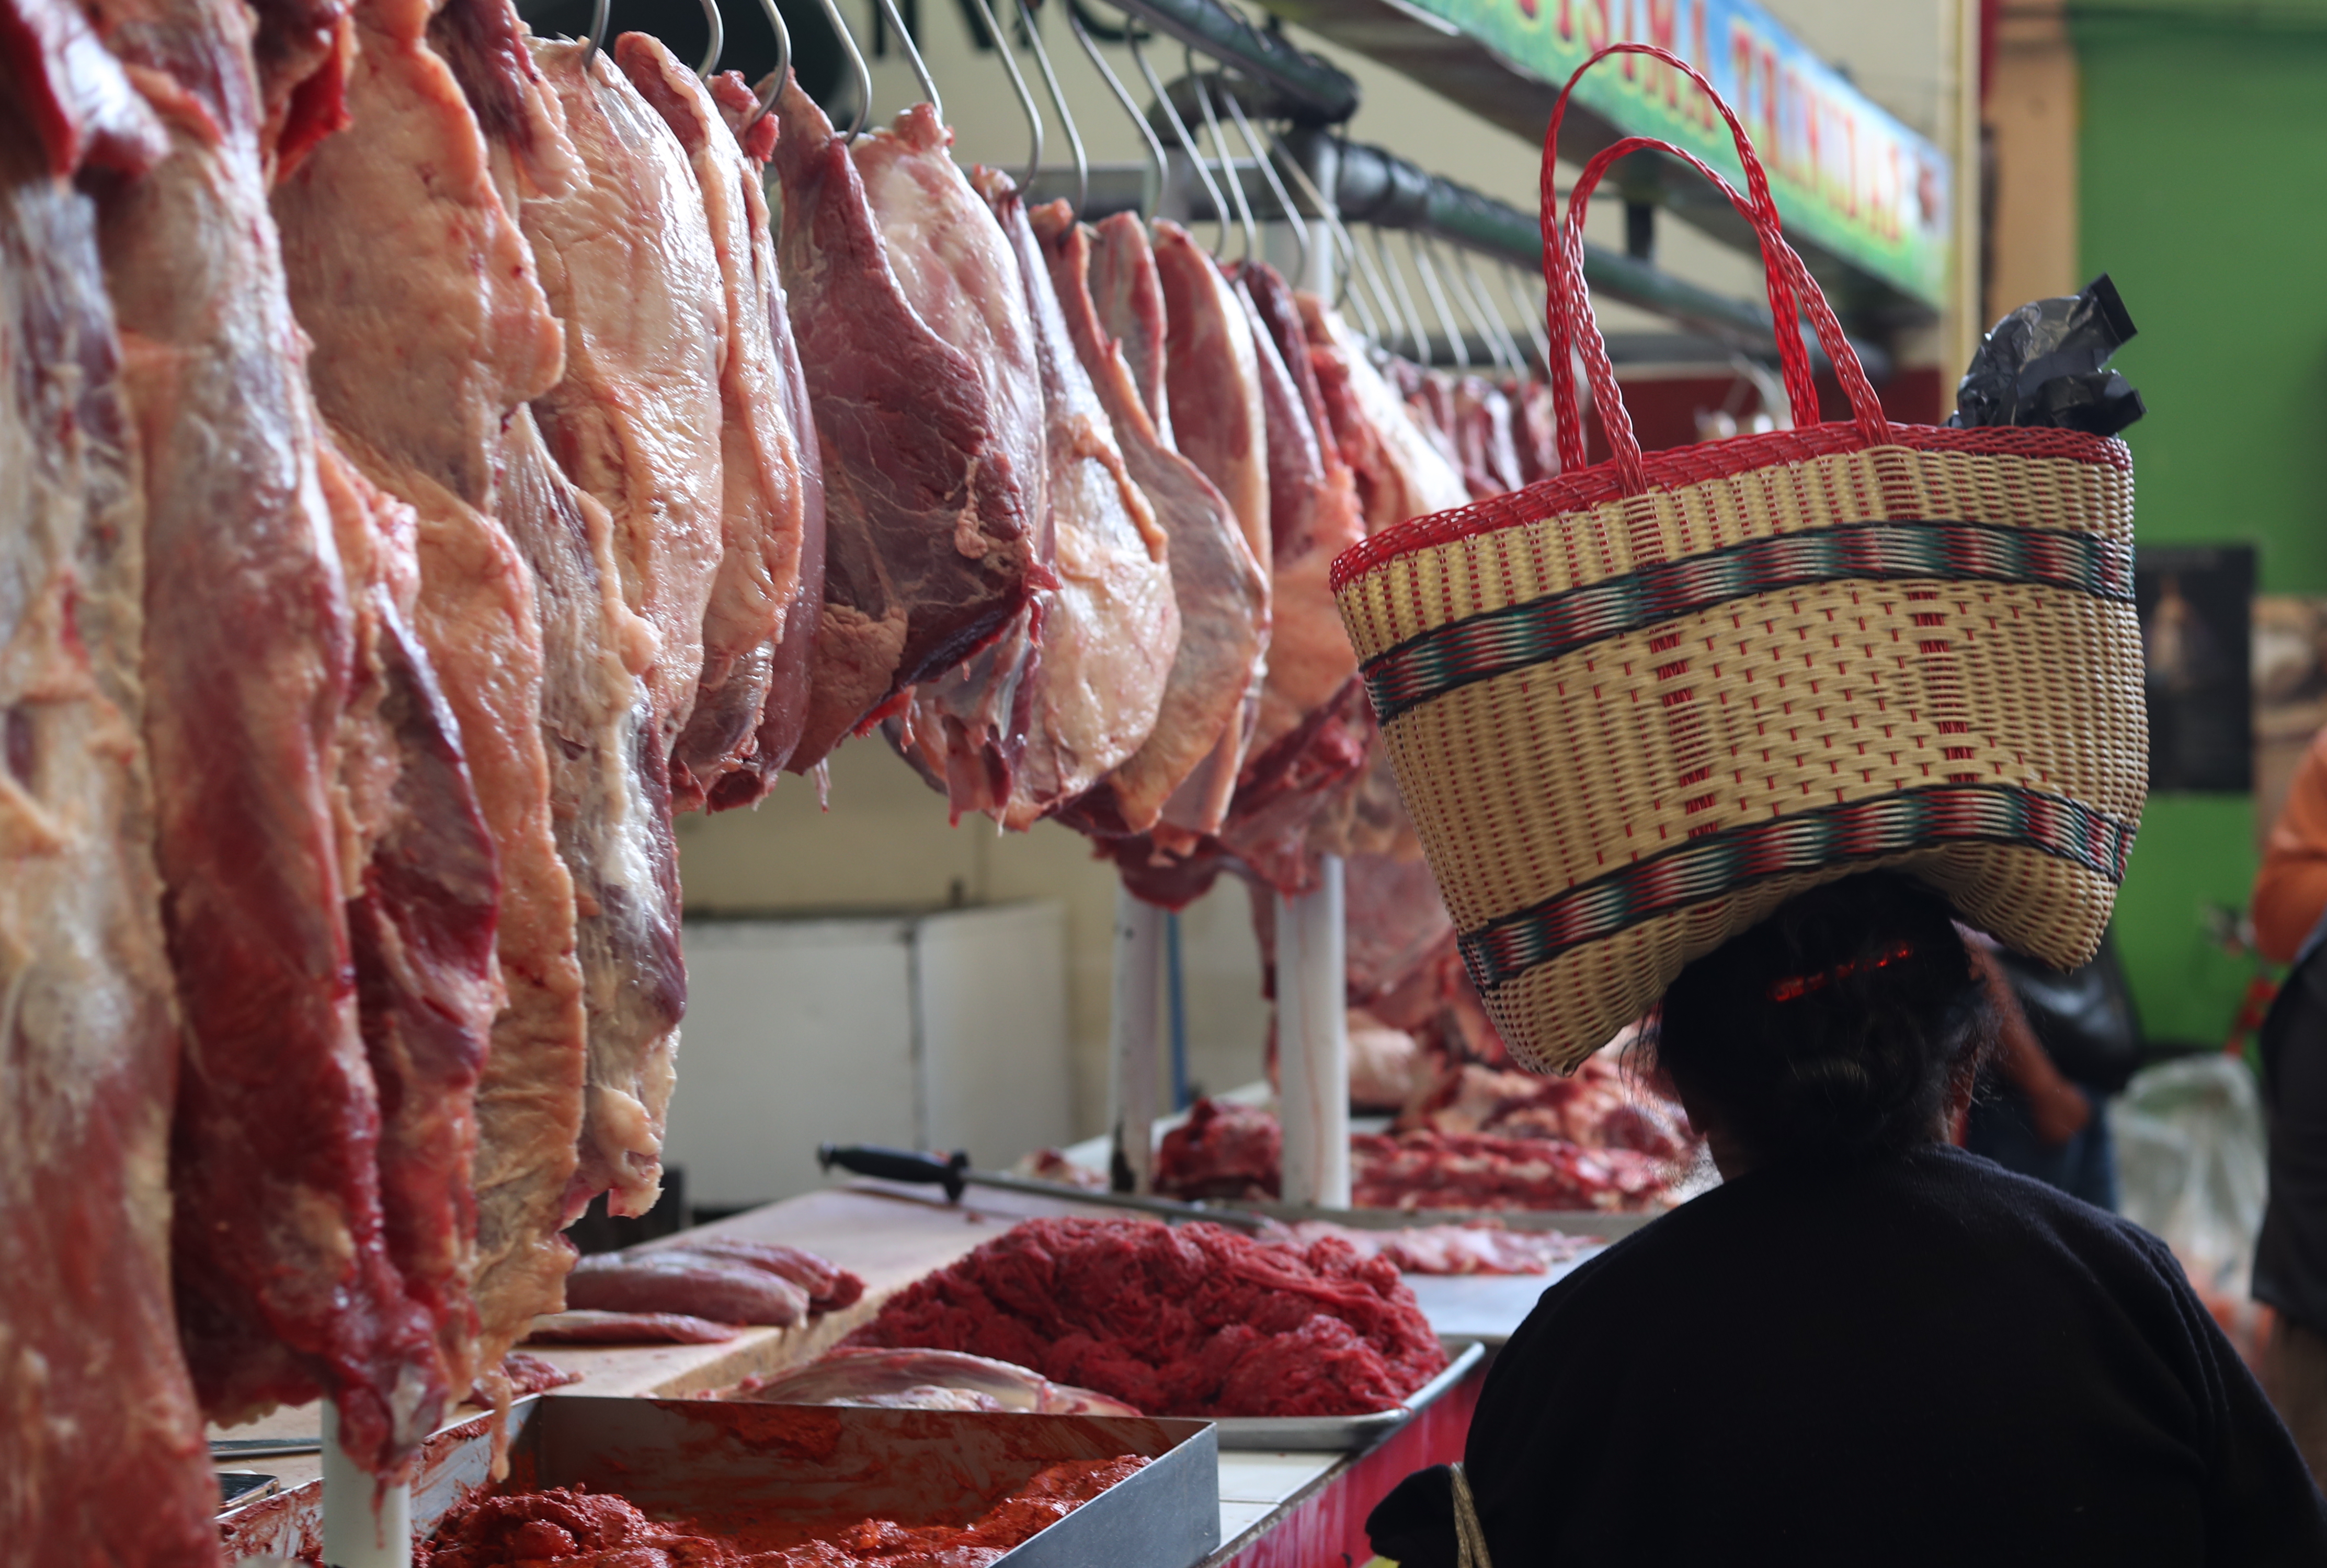 Expendedores de carne bovino en Guatemala